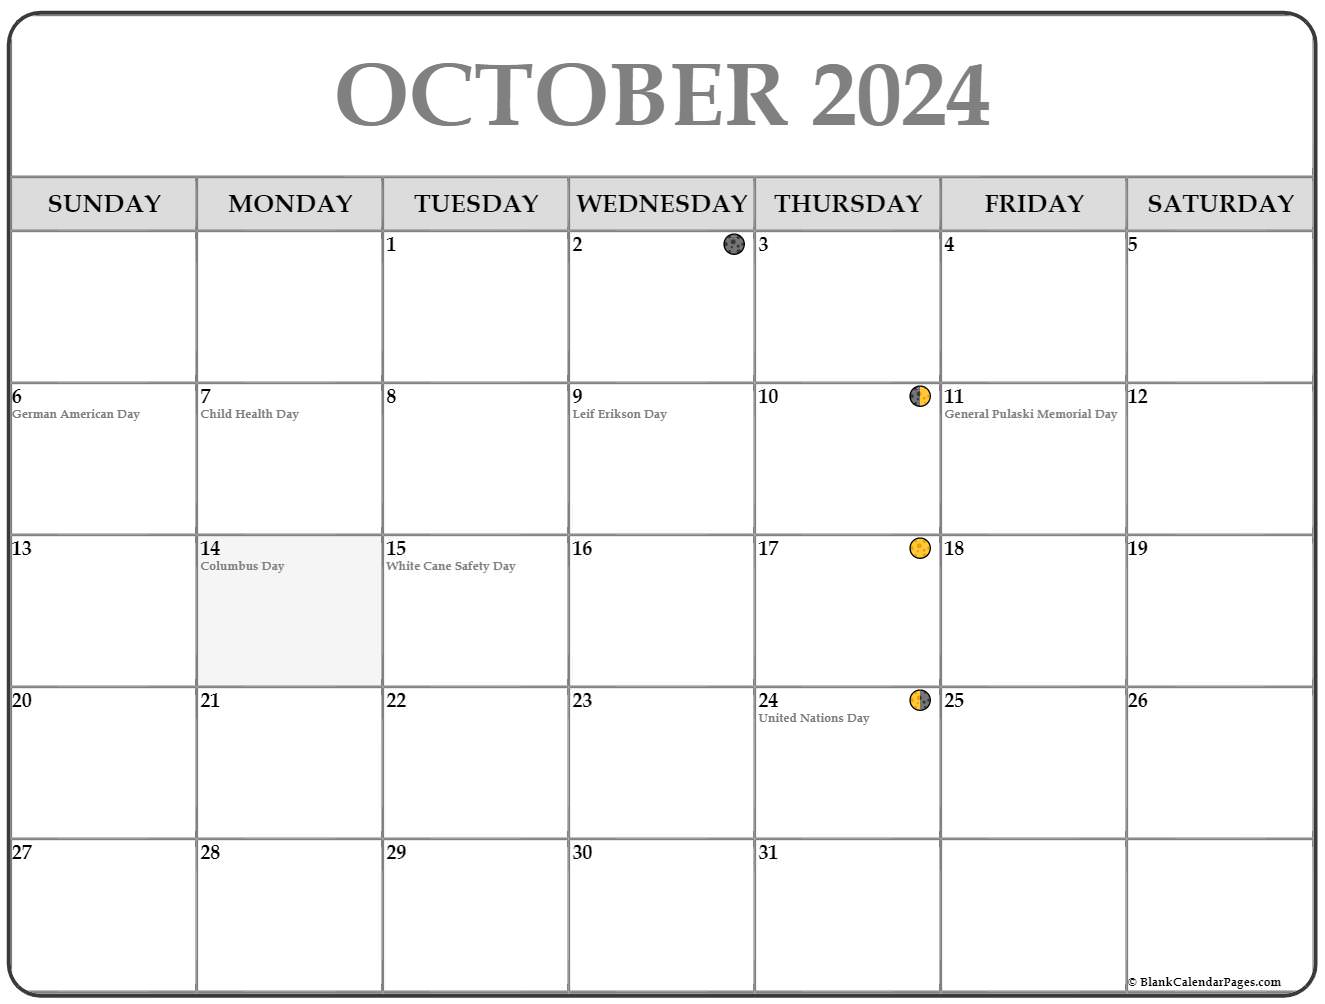 October 2024 Calendar Moon1 